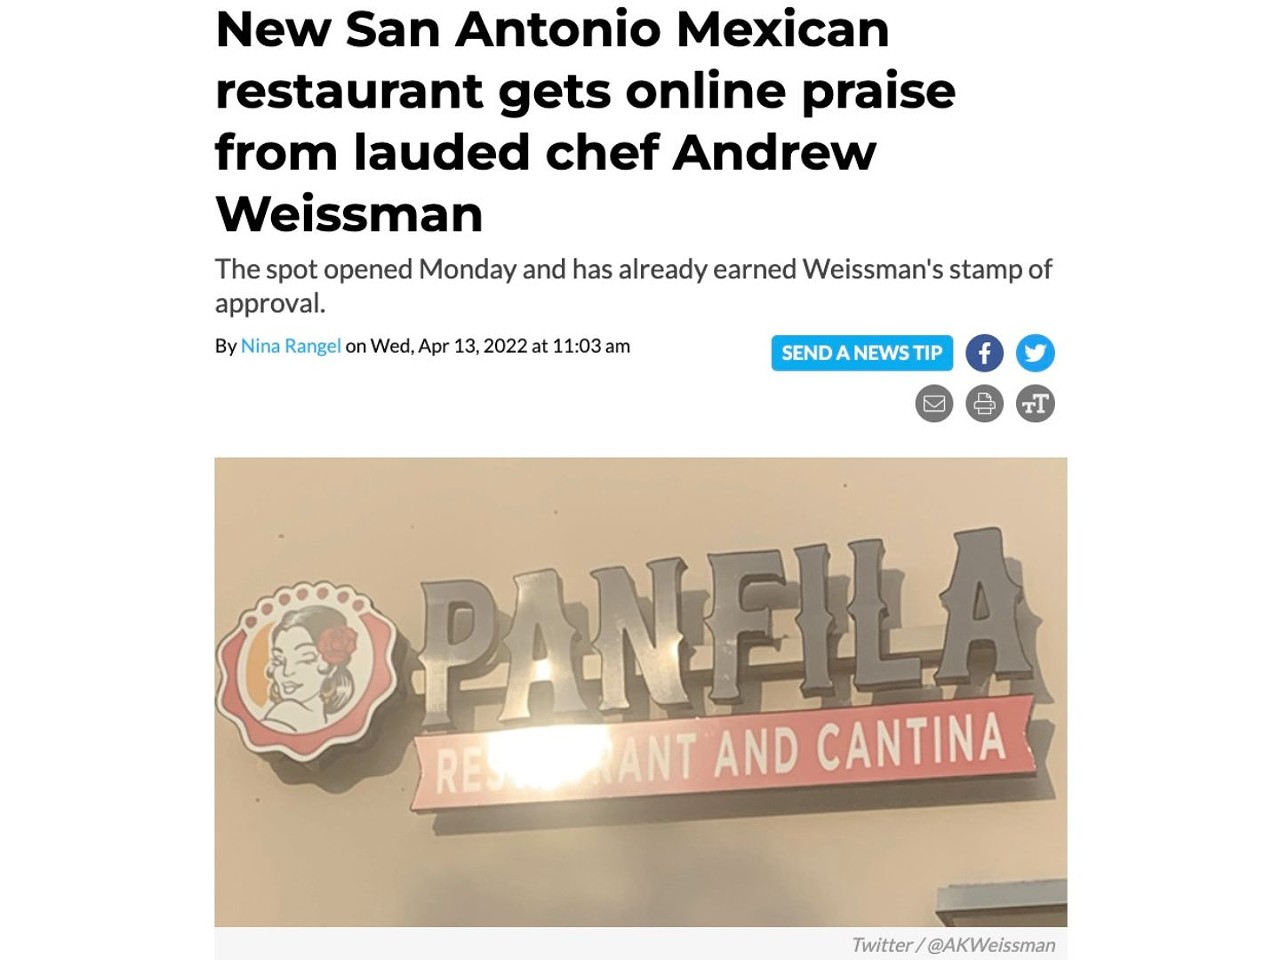 14. New San Antonio Mexican restaurant gets online praise from lauded chef Andrew Weissman